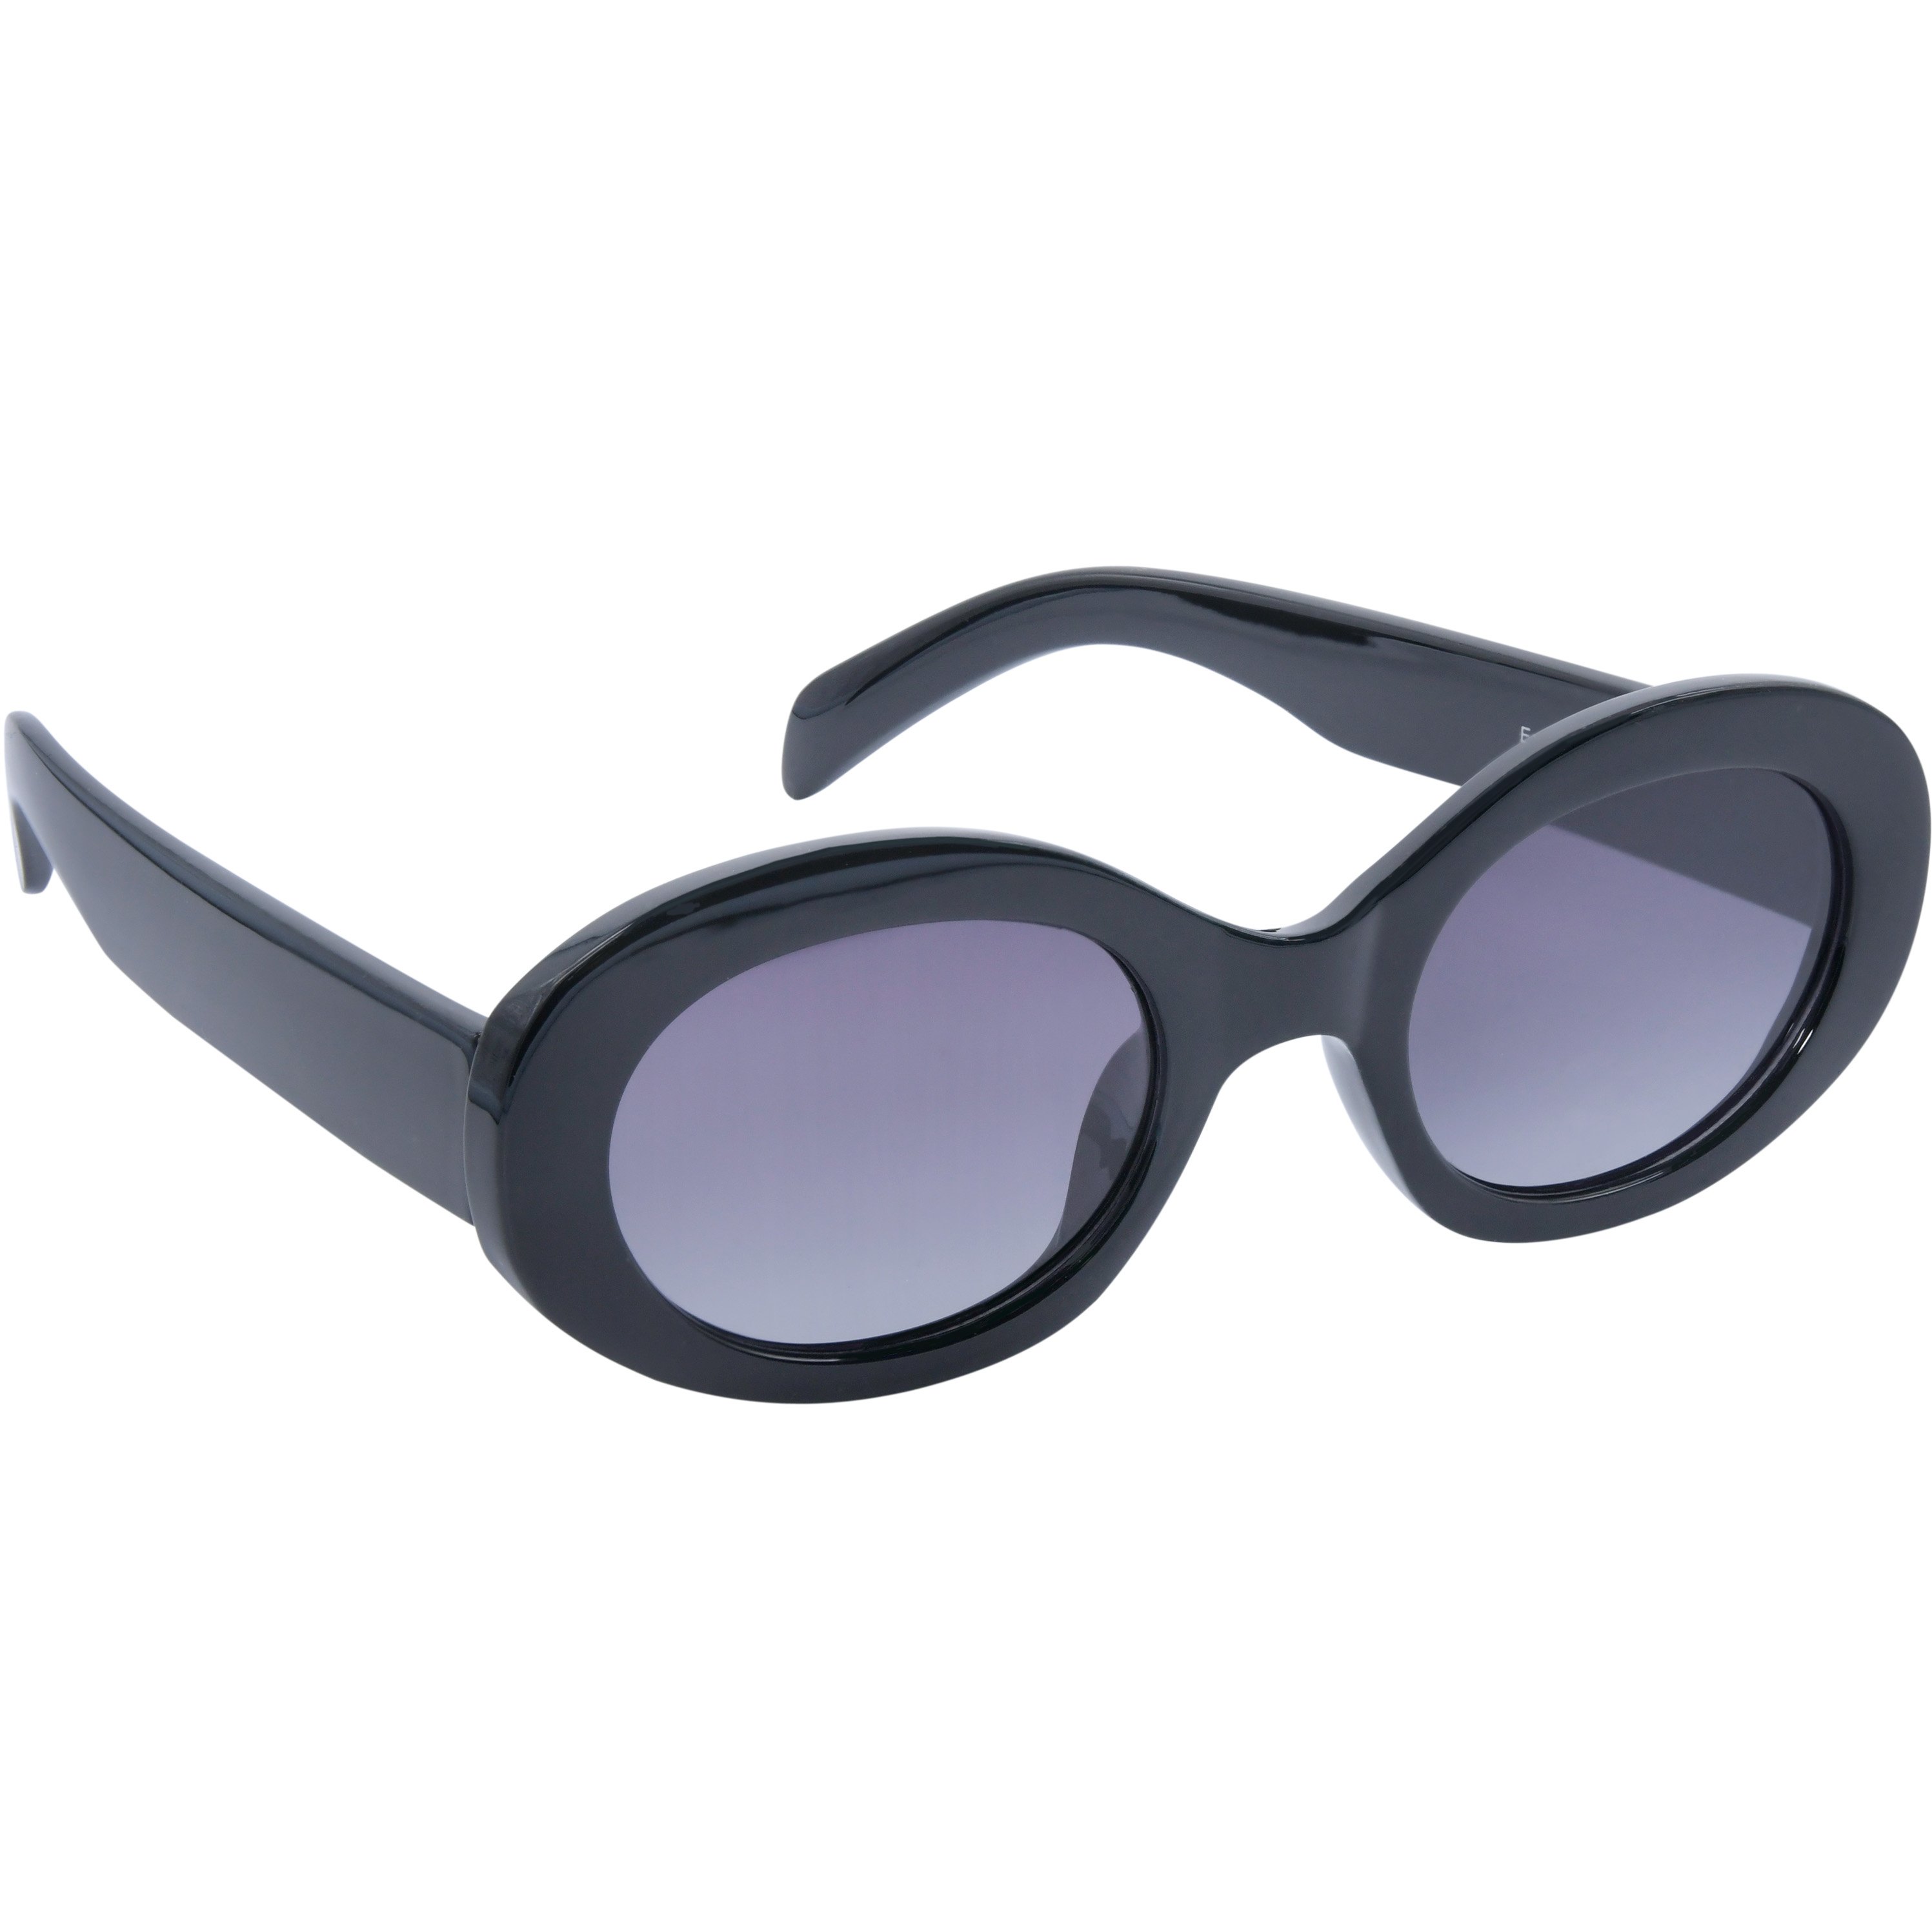 Eyelead Polarized Sunglasses Γυναικεία Γυαλιά Ηλίου 1 Τεμάχιο, Κωδ L731 - Μαύρο